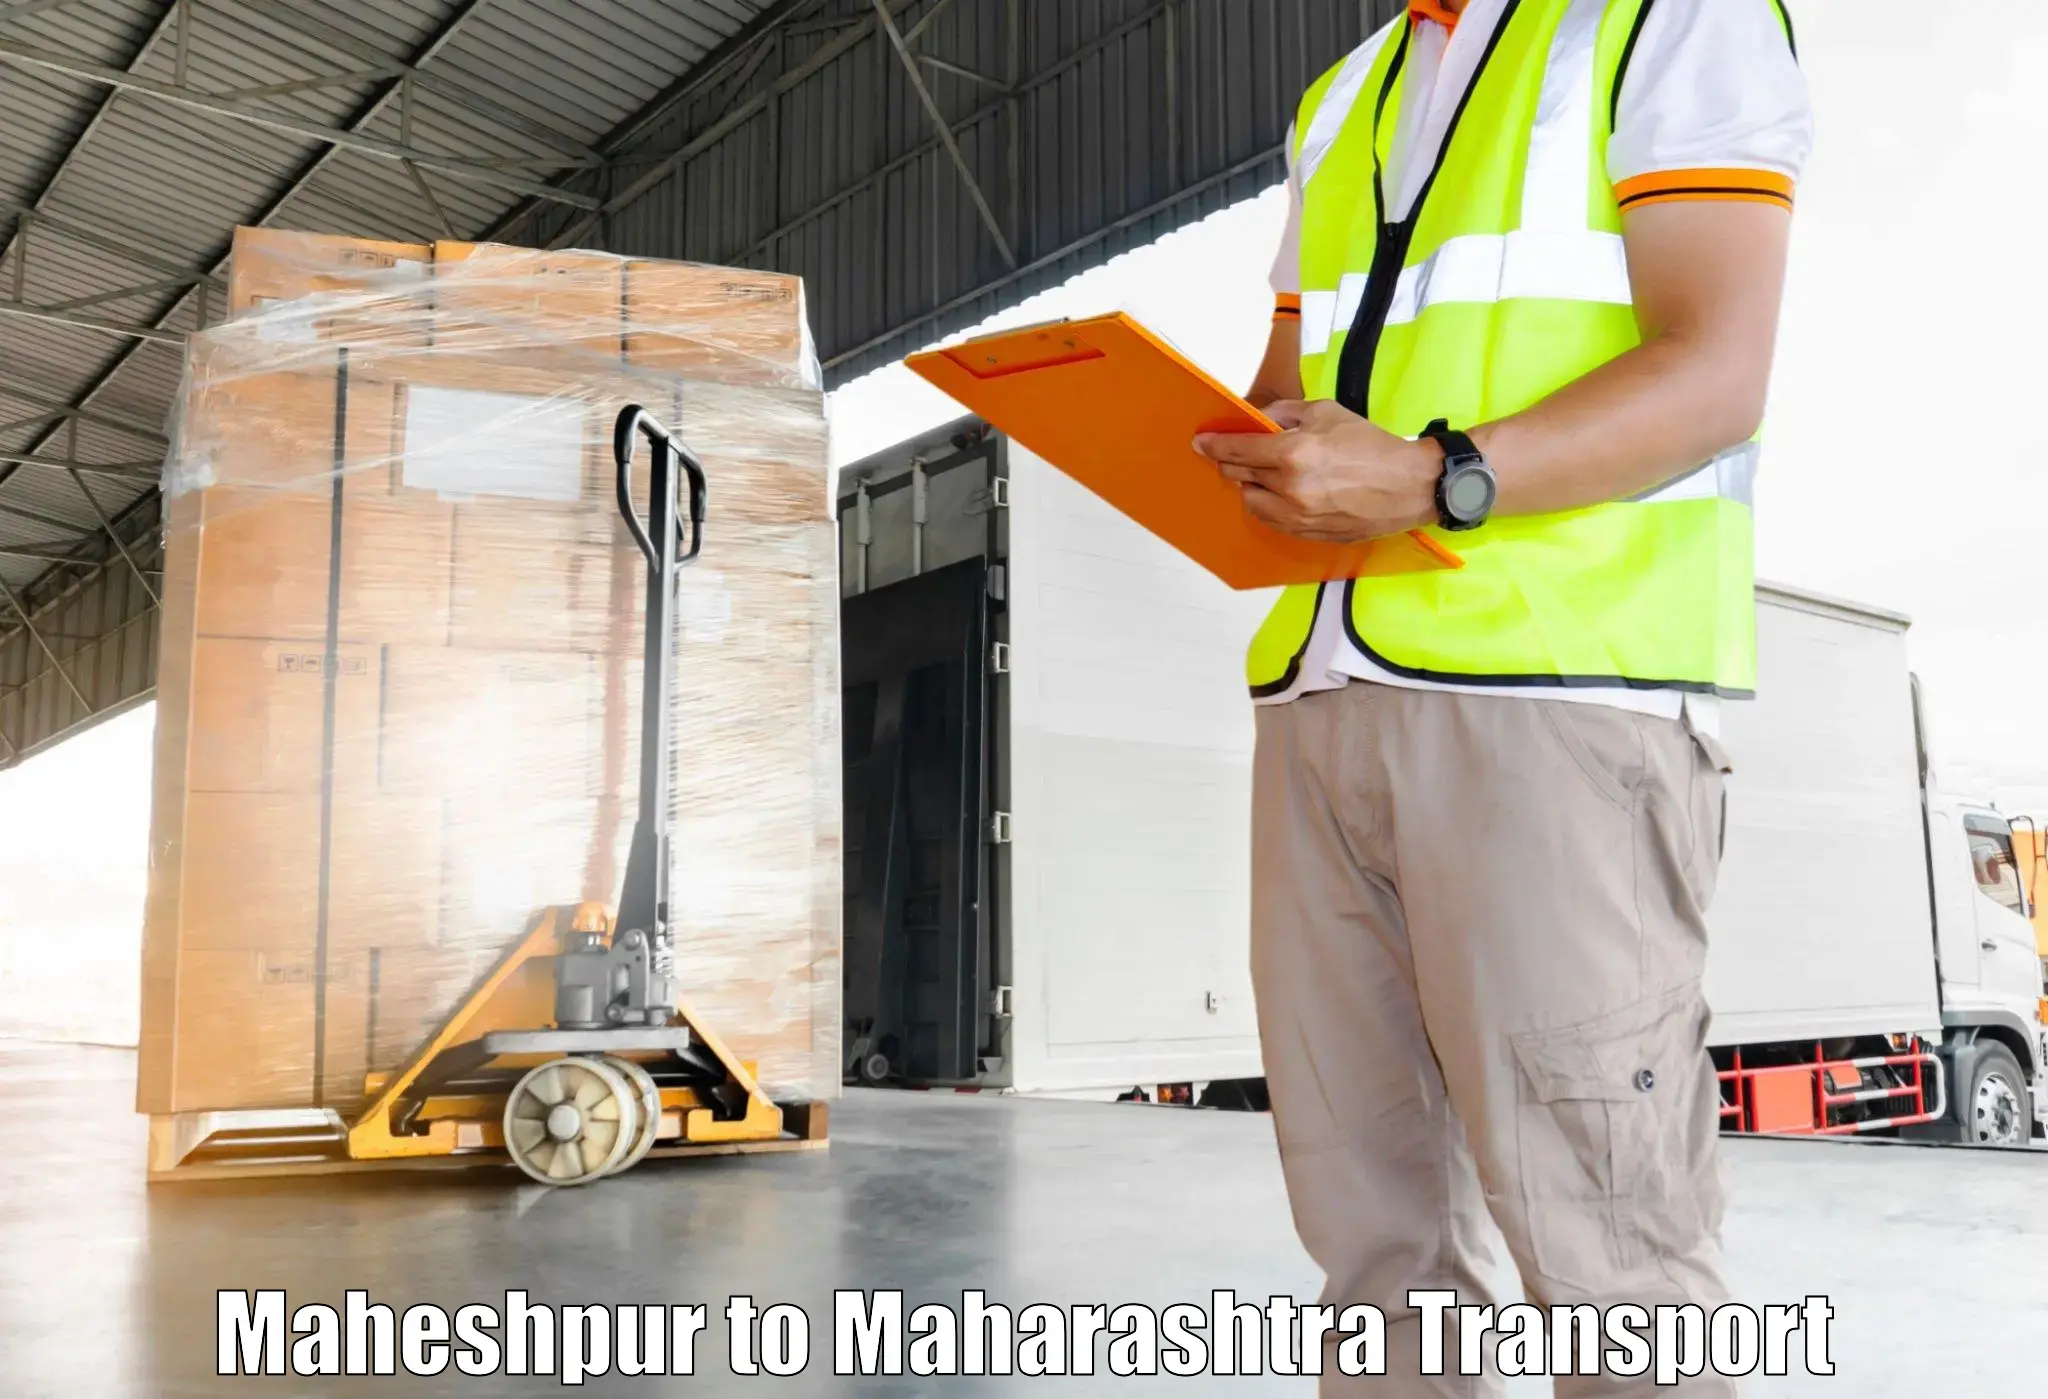 Truck transport companies in India Maheshpur to Kolhapur